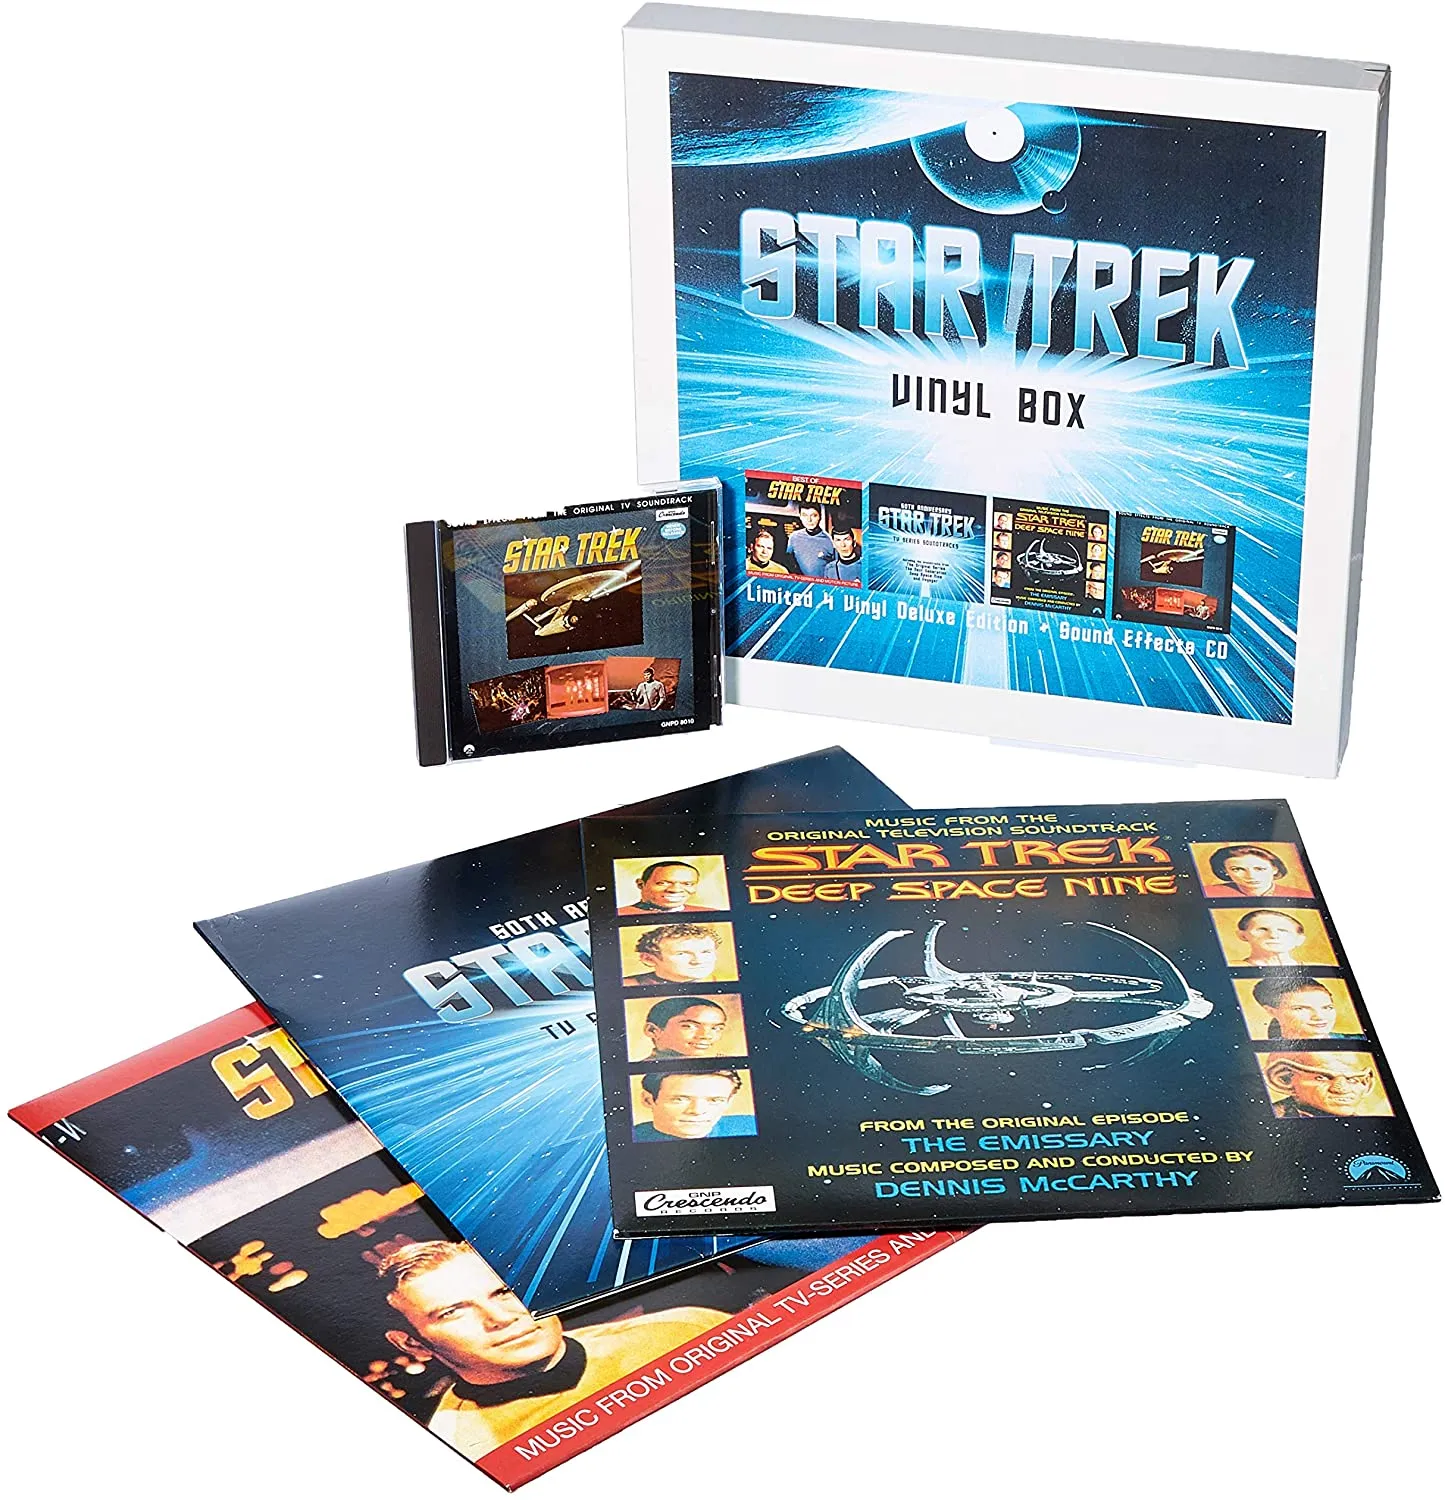 Star Trek-Vinyl Box - Limited 4 Vinyl Deluxe Edition + Sound Effects CD - Various 